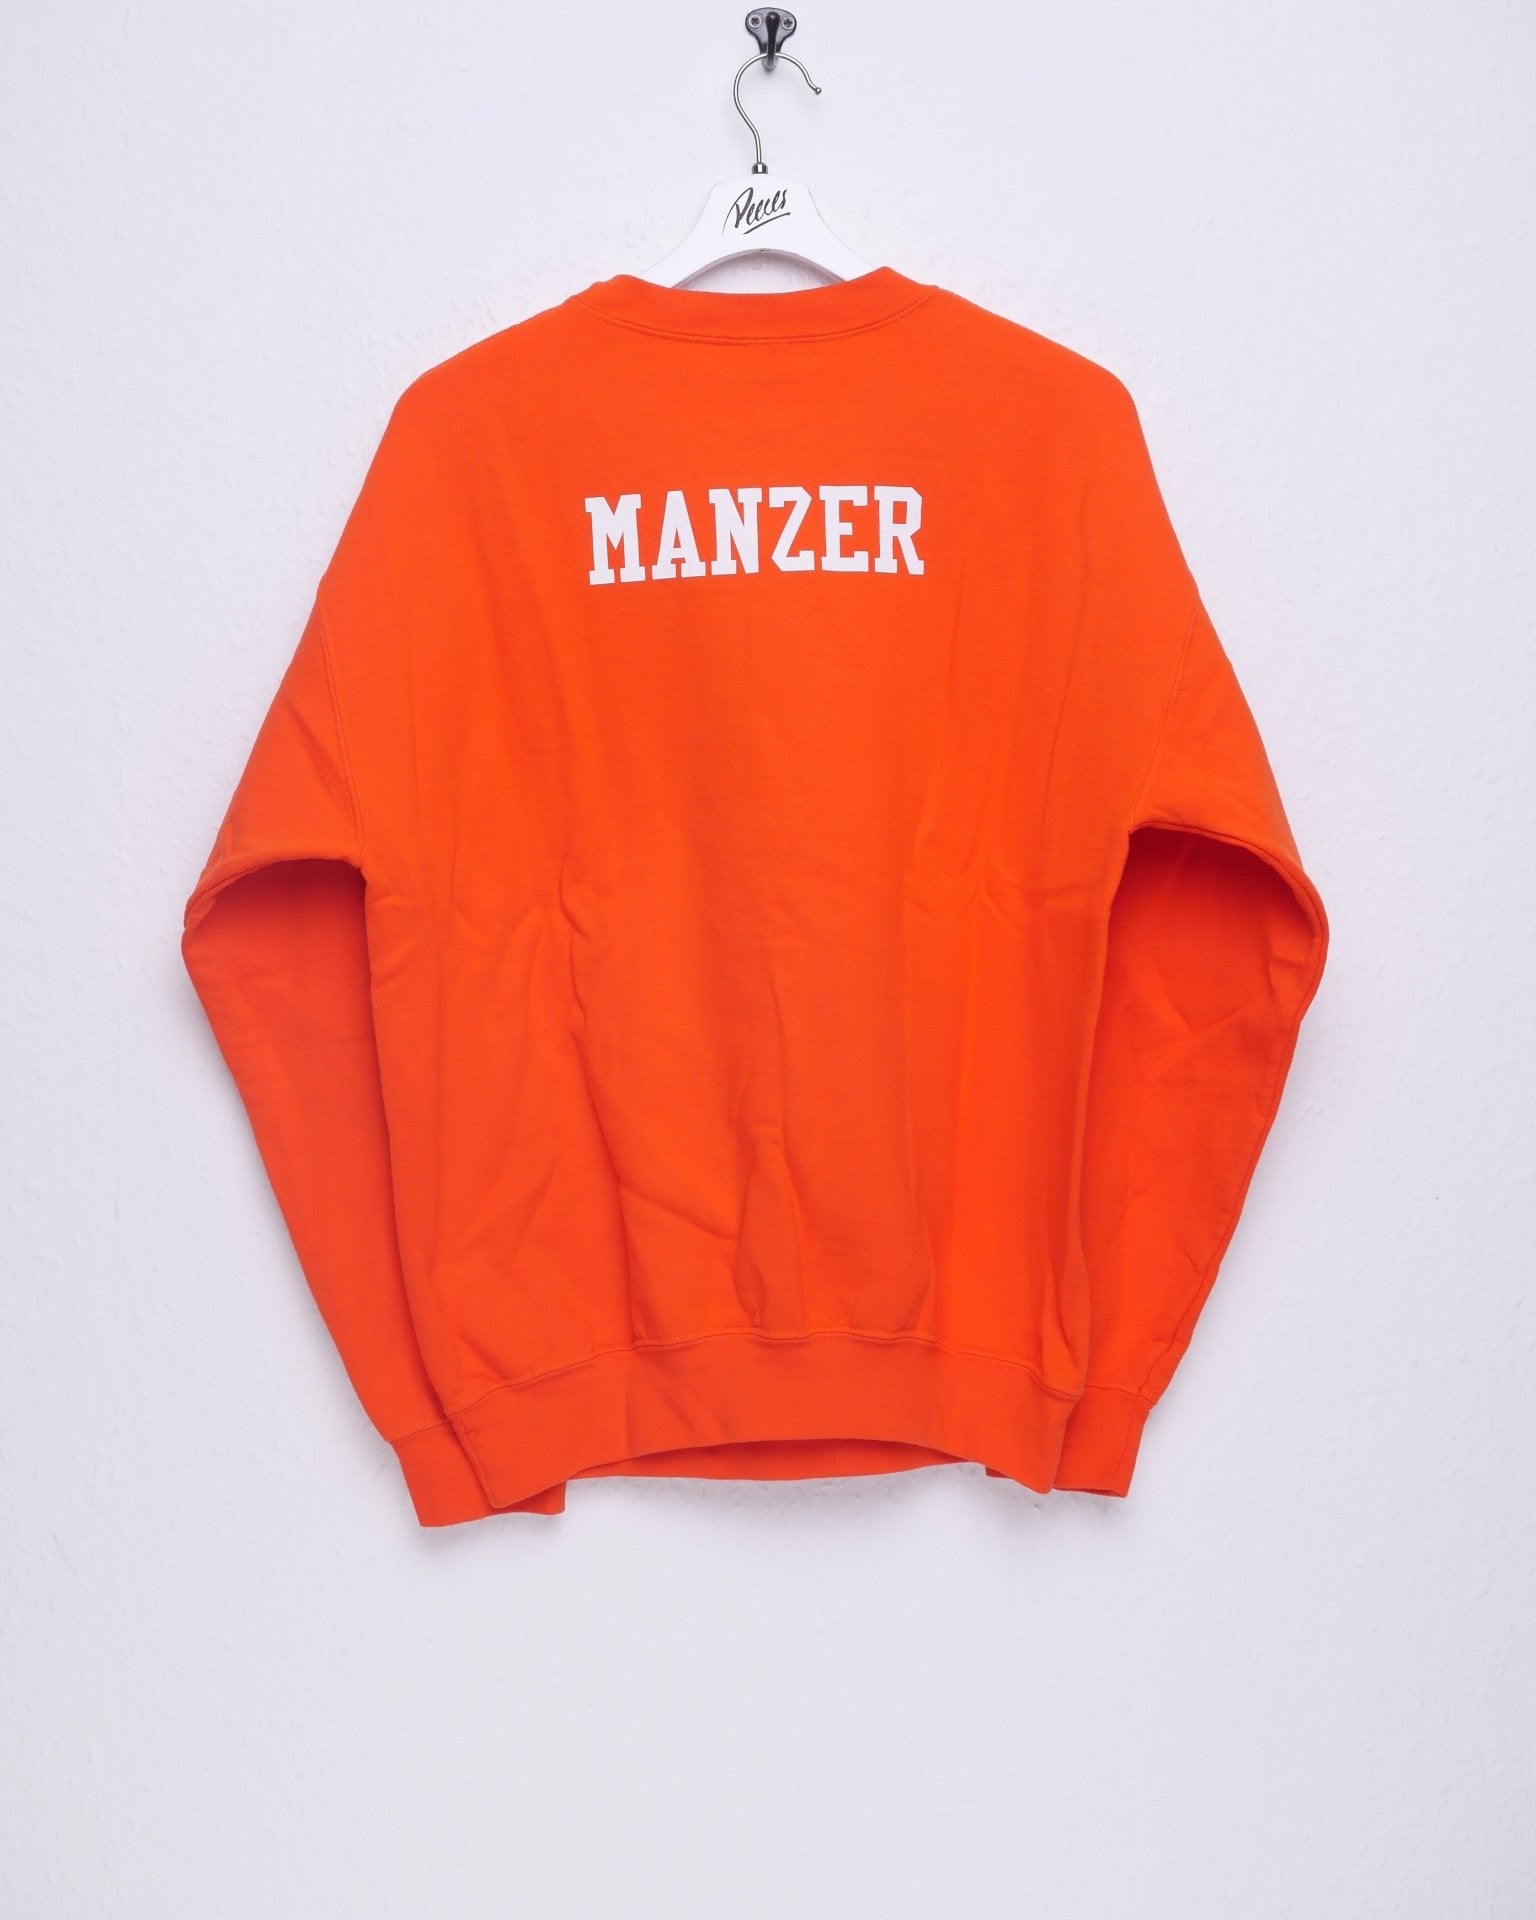 2013 West Varsity printed Spellout orange Sweater - Peeces